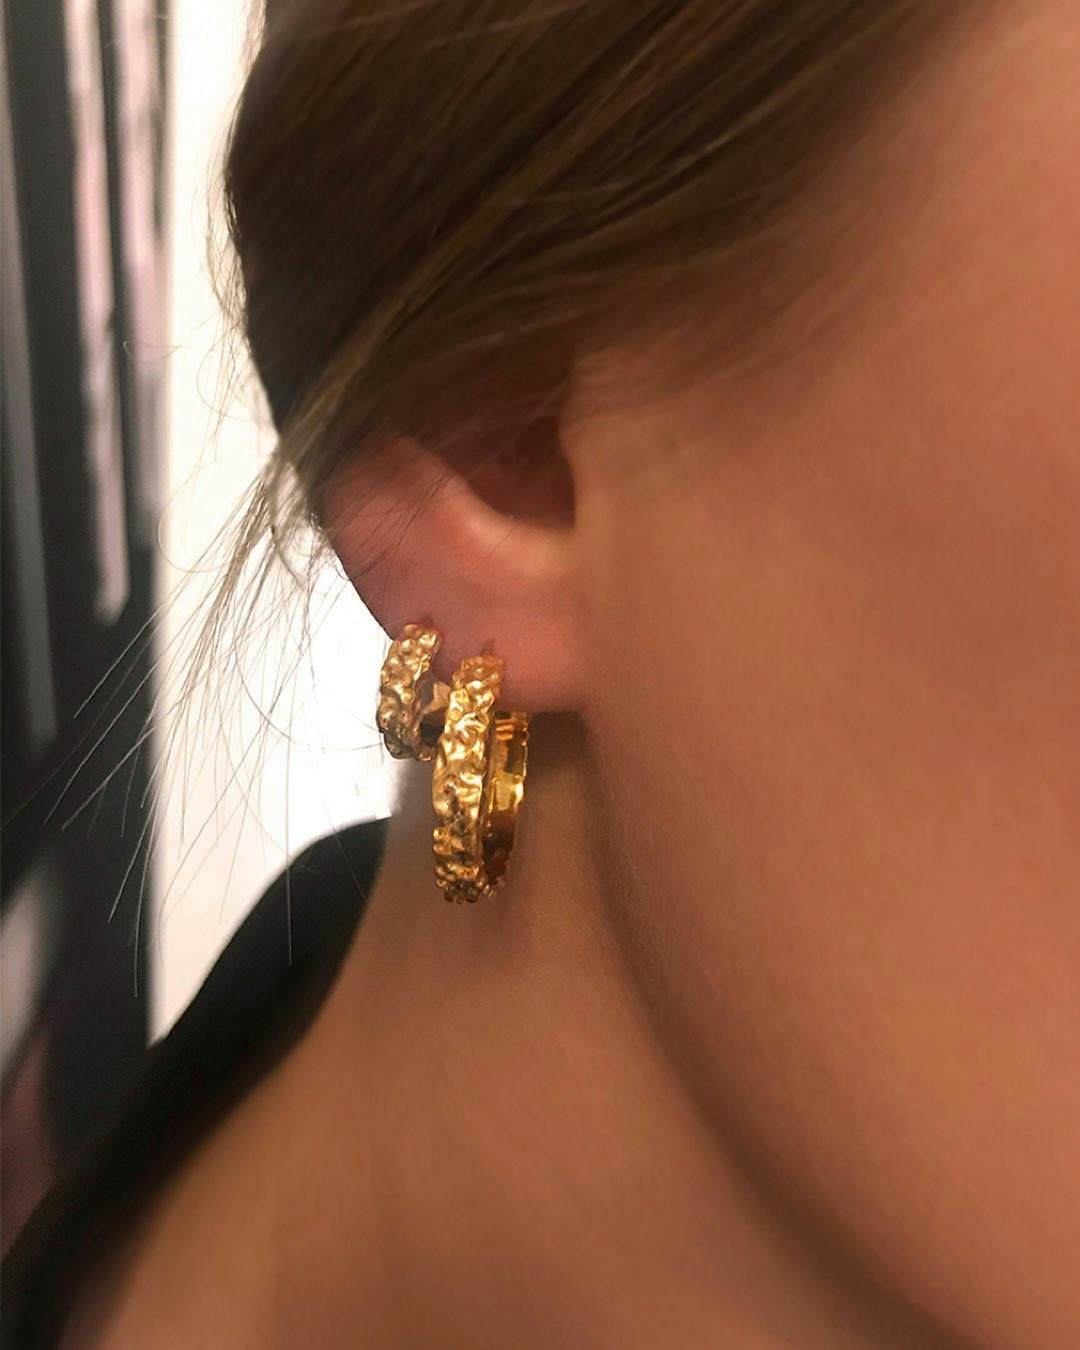 Aio Small earrings från Maanesten i Silver Sterling 925